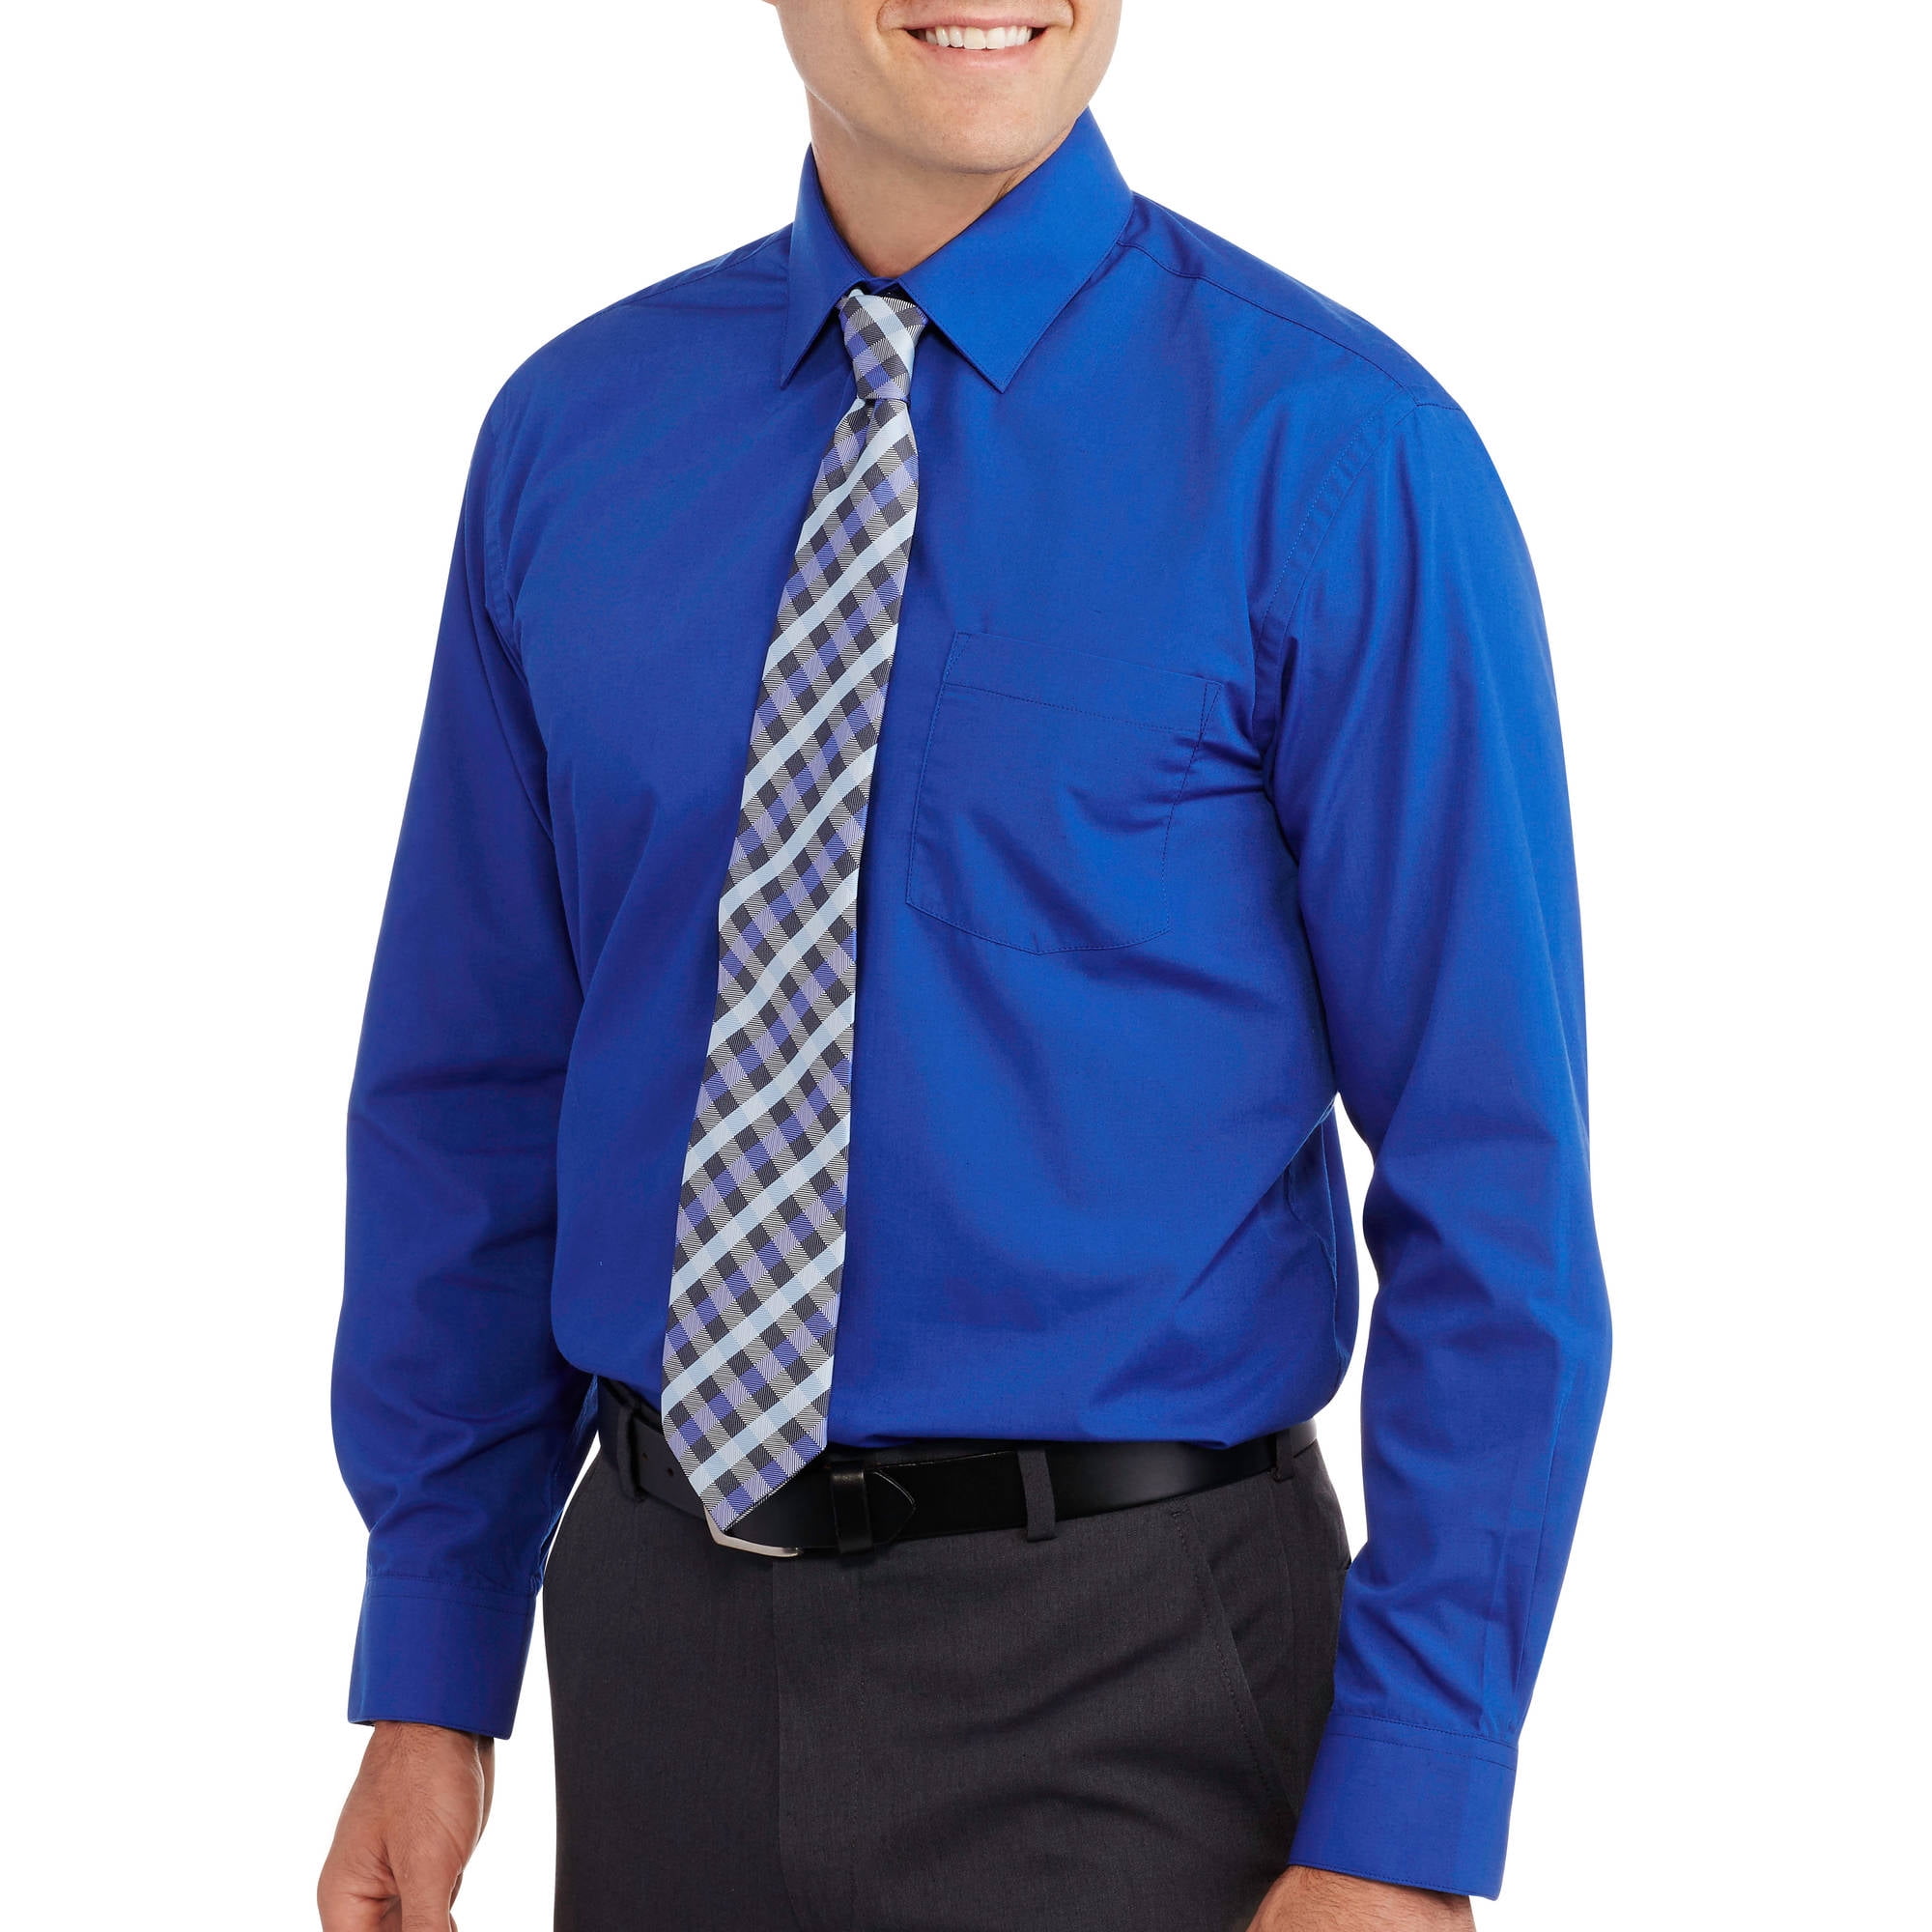 Online - Big Men's Solid Dress Shirt with Matching Tie ...